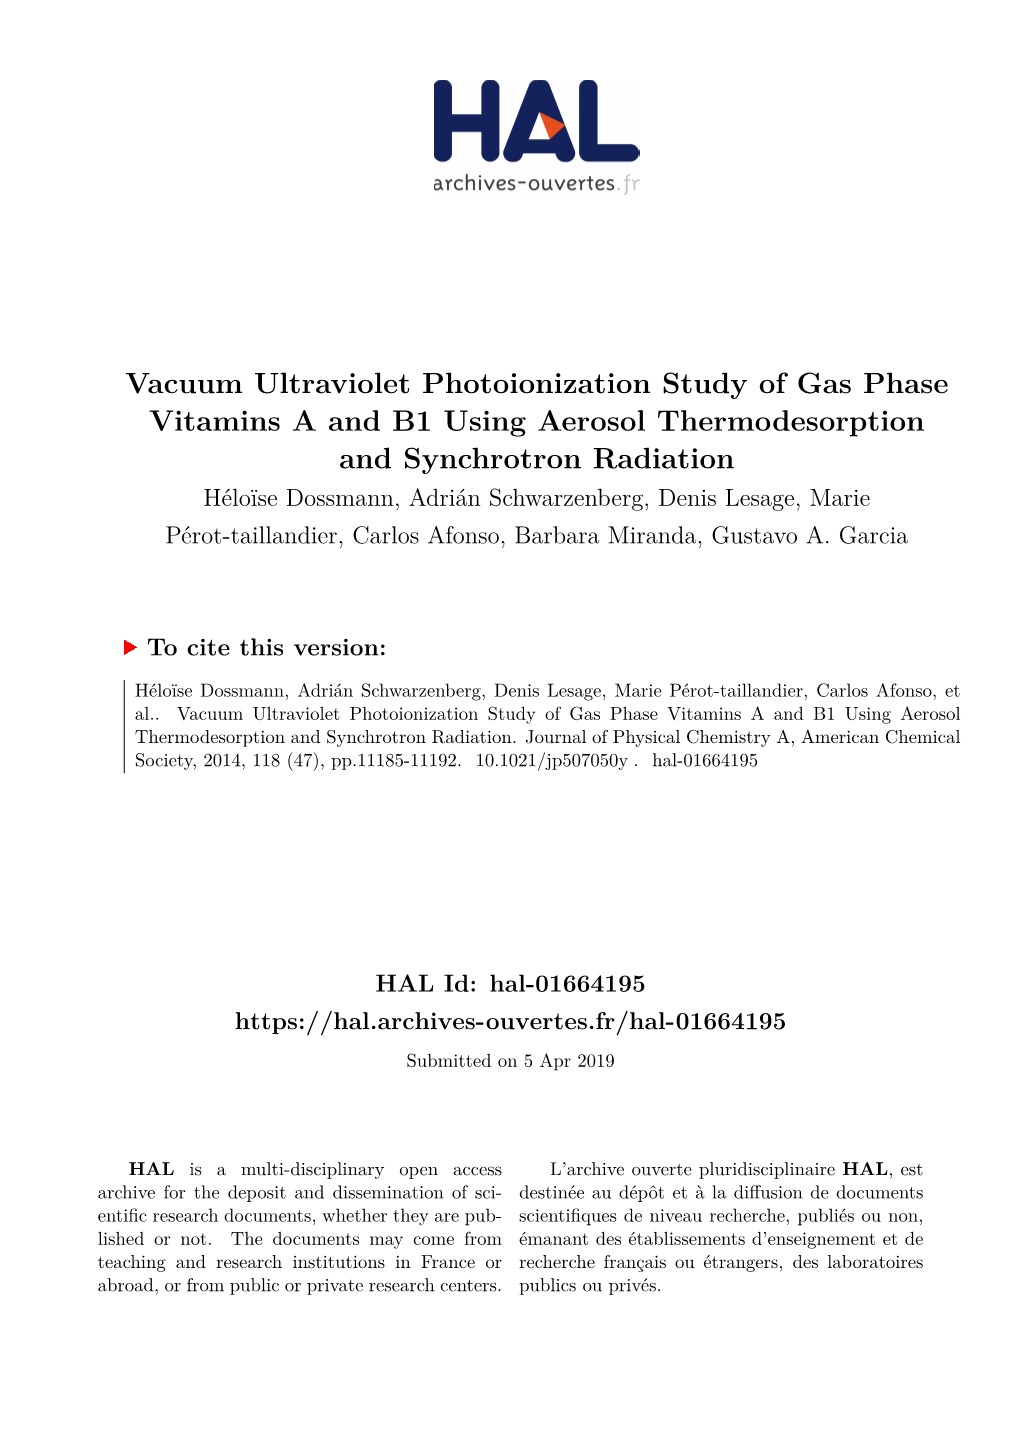 Vacuum Ultraviolet Photoionization Study of Gas Phase Vitamins a and B1 Using Aerosol Thermodesorption and Synchrotron Radiation